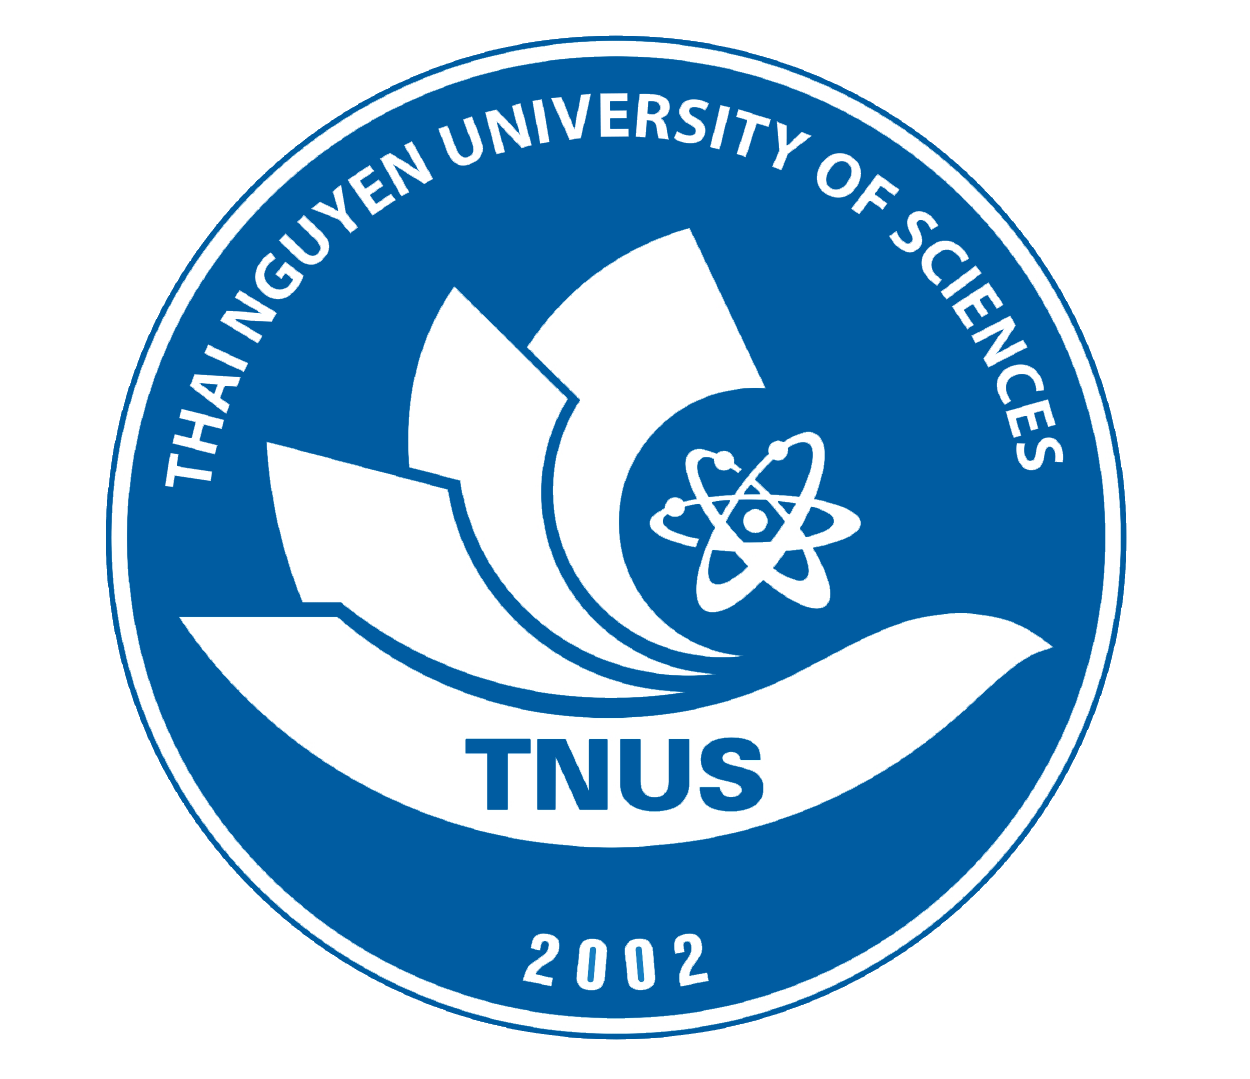 TNUS Logo with Slogan